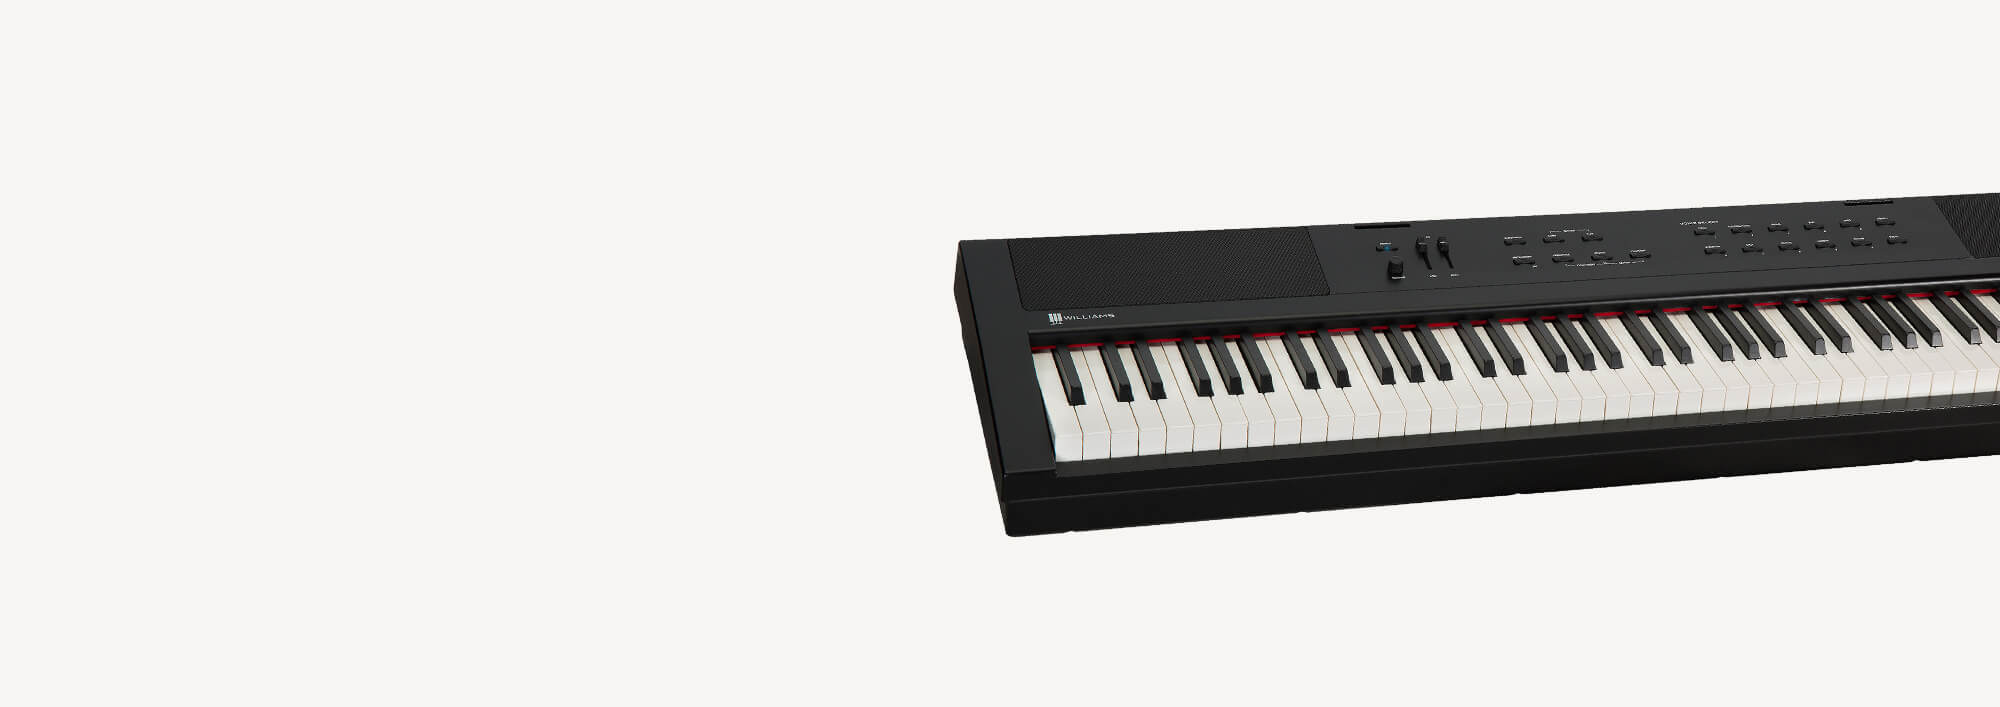 Williams Allegro 3 digital piano.